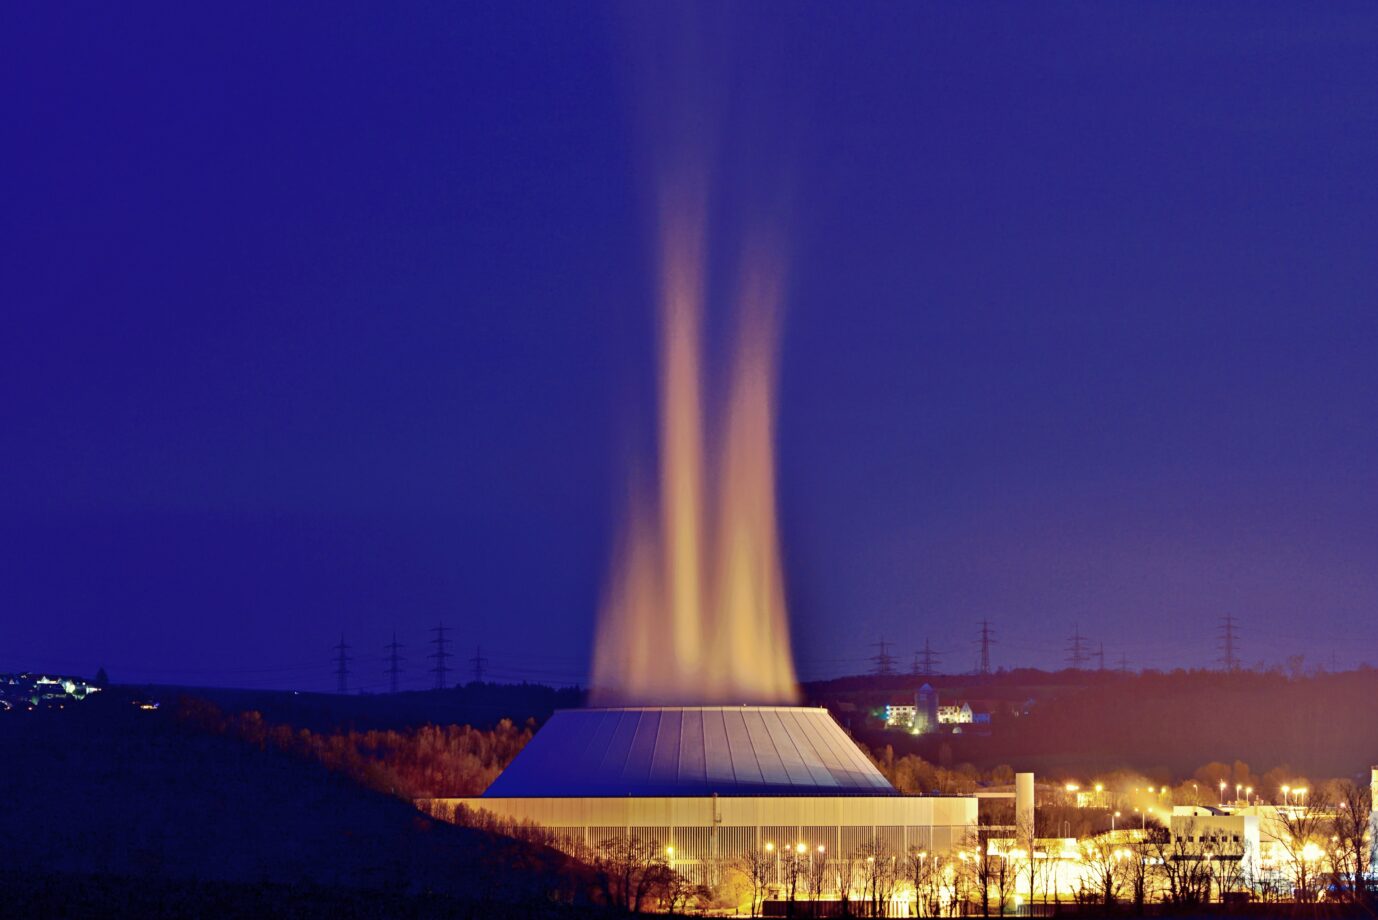 Kühlturm des Kernkraftwerks Neckarwestheim dampft